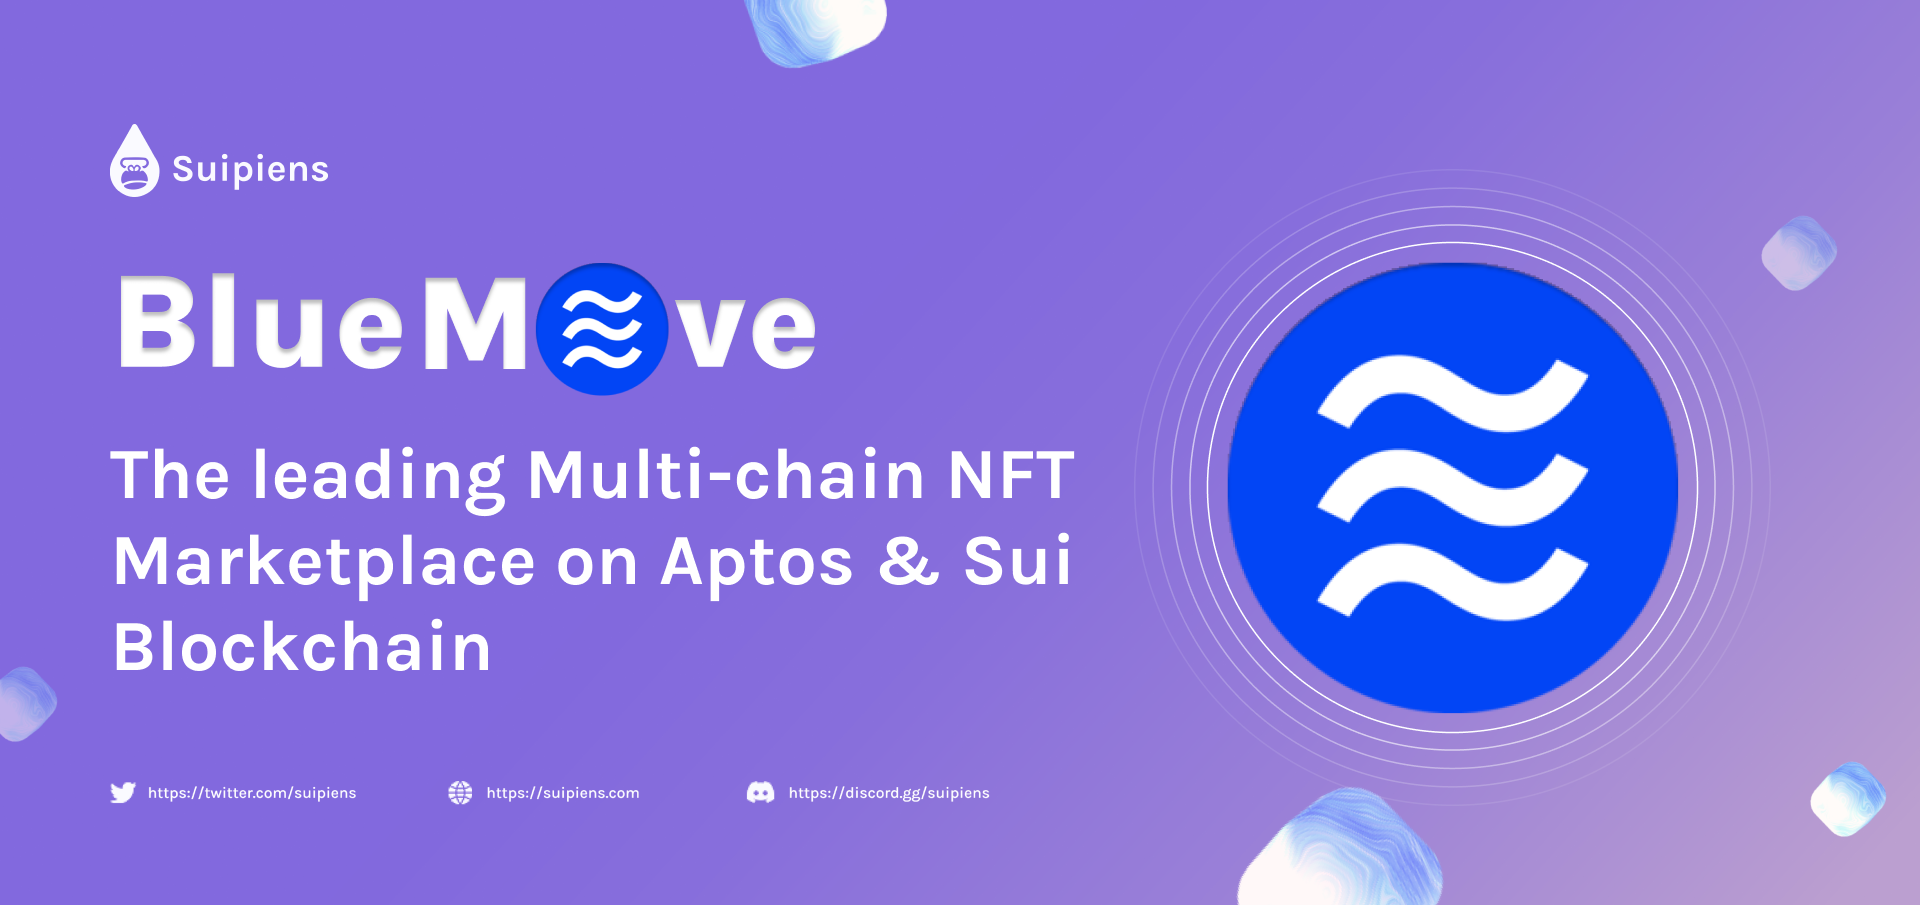 BlueMove - The leading Multi-chain NFT Marketplace on Aptos & Sui Blockchain